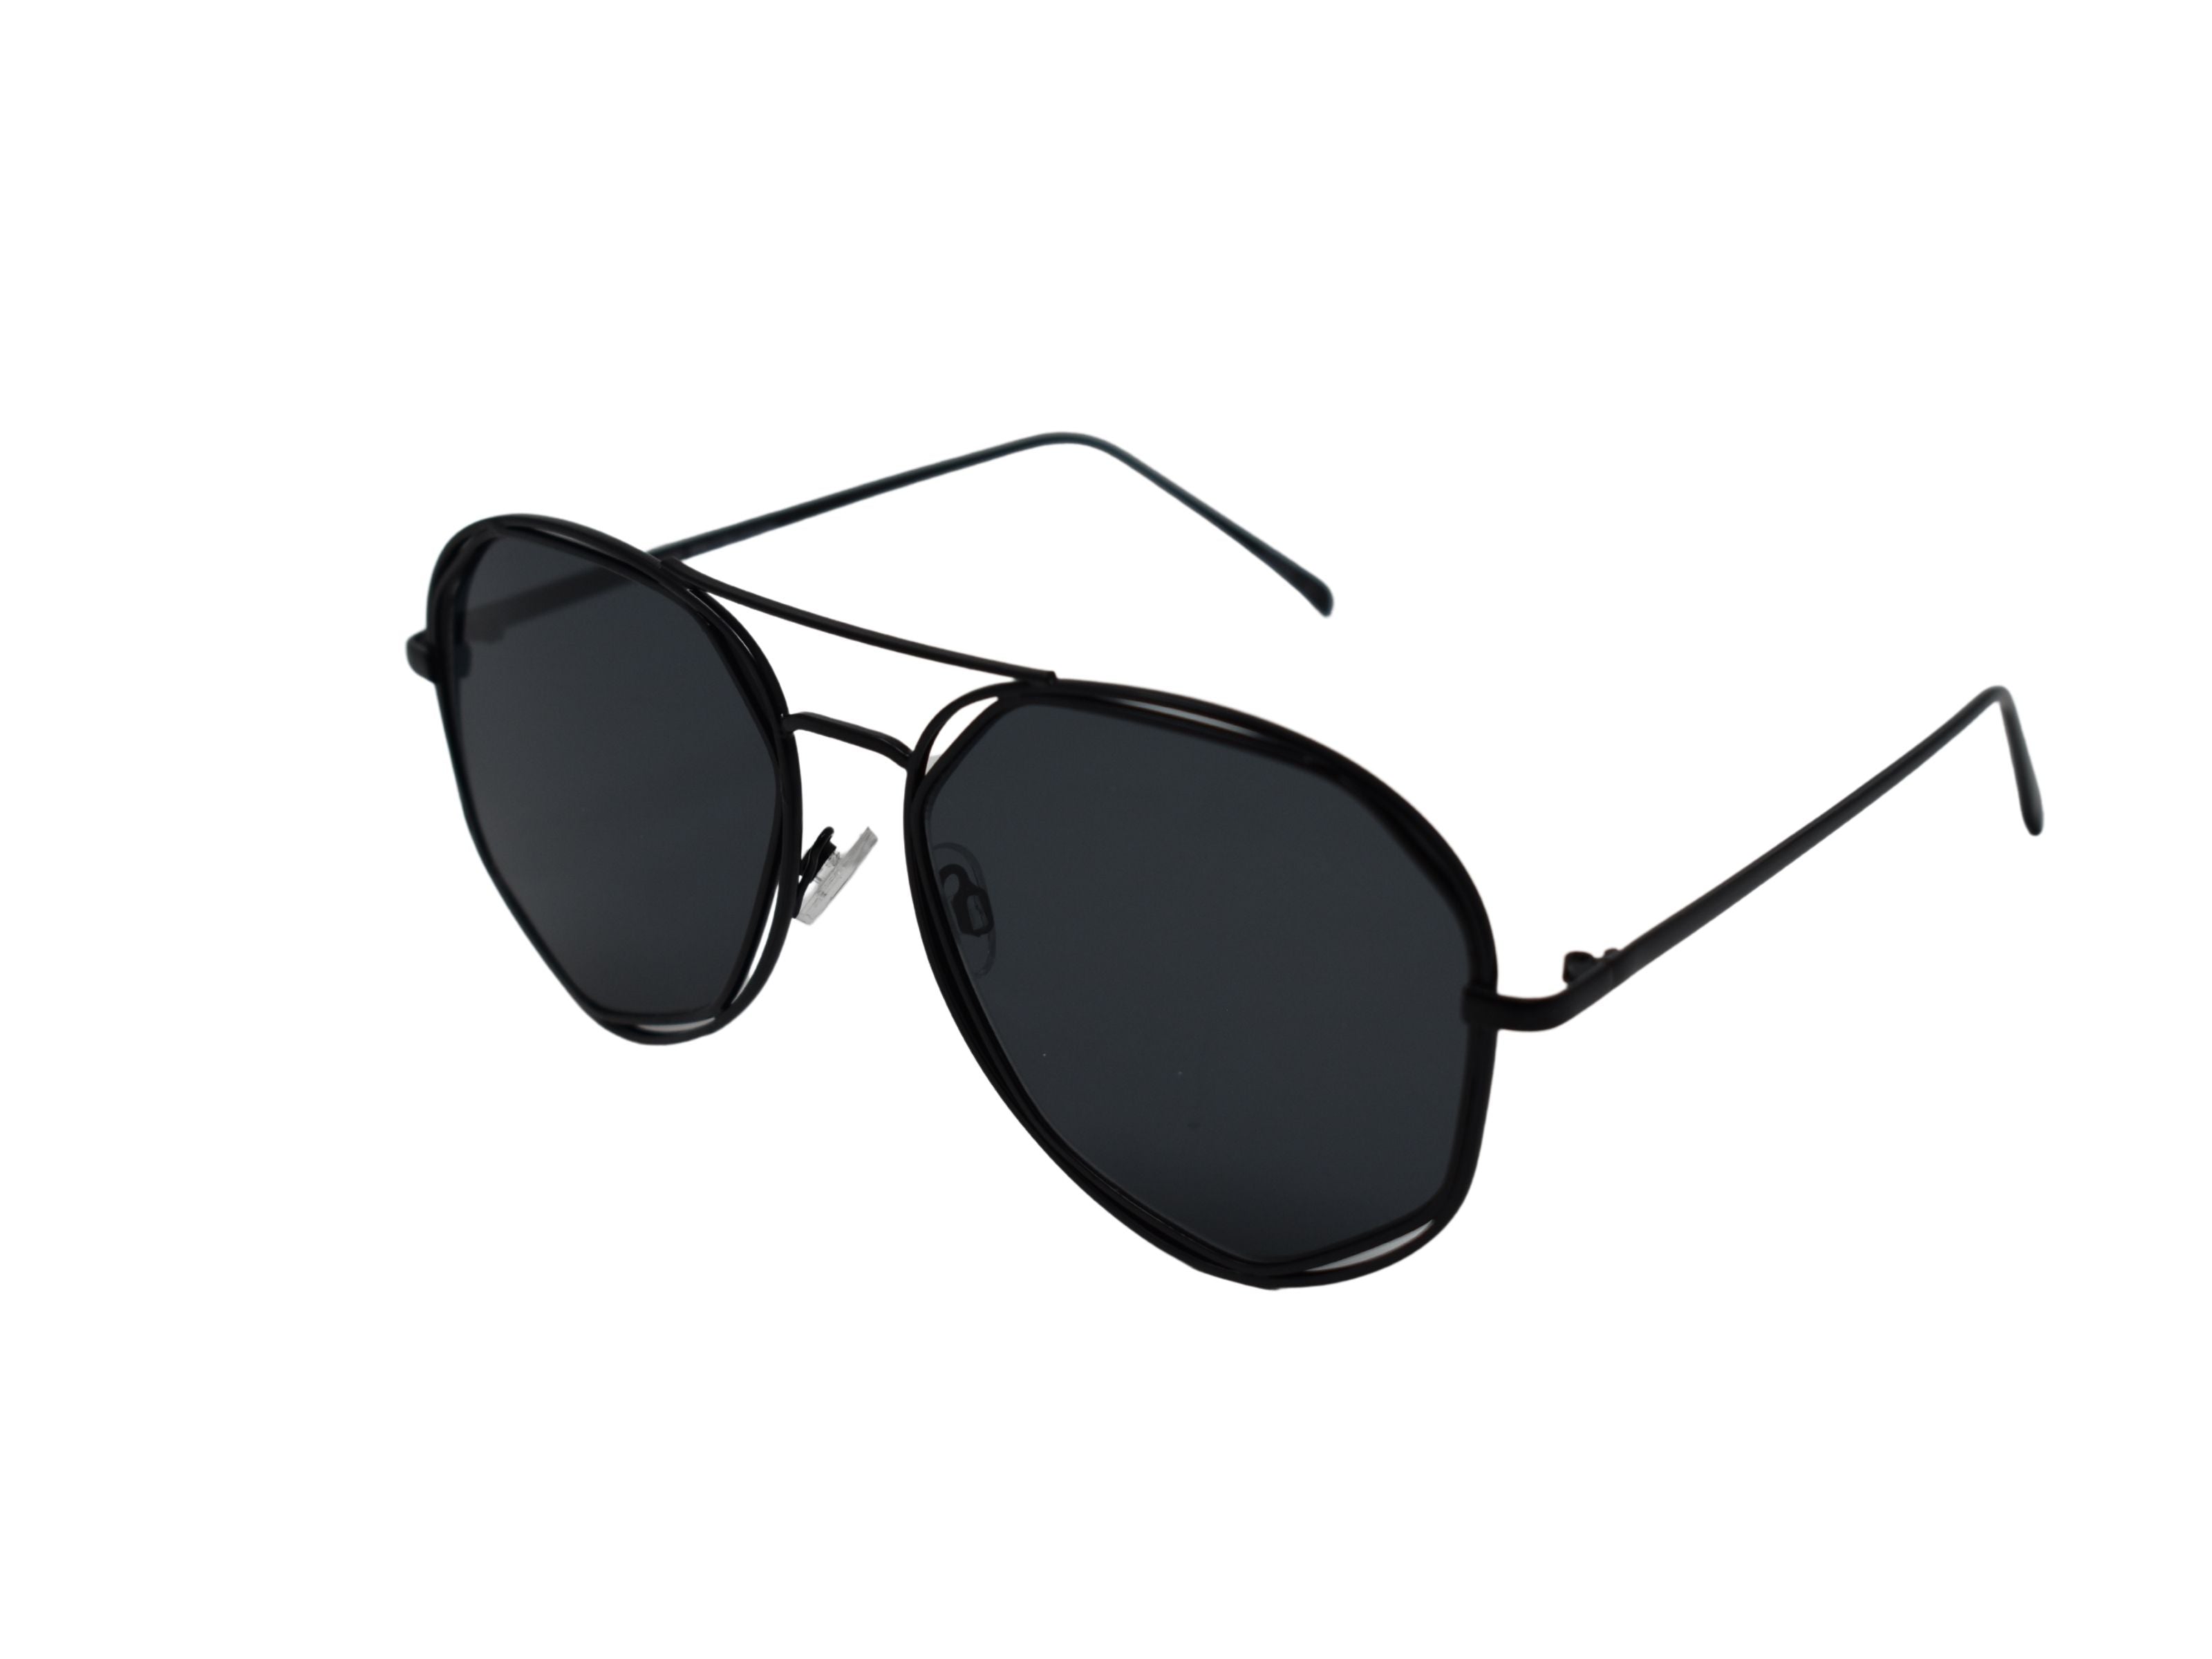 Dare to be bold in our Bergenia Geometric Aviator style Sunglasses.